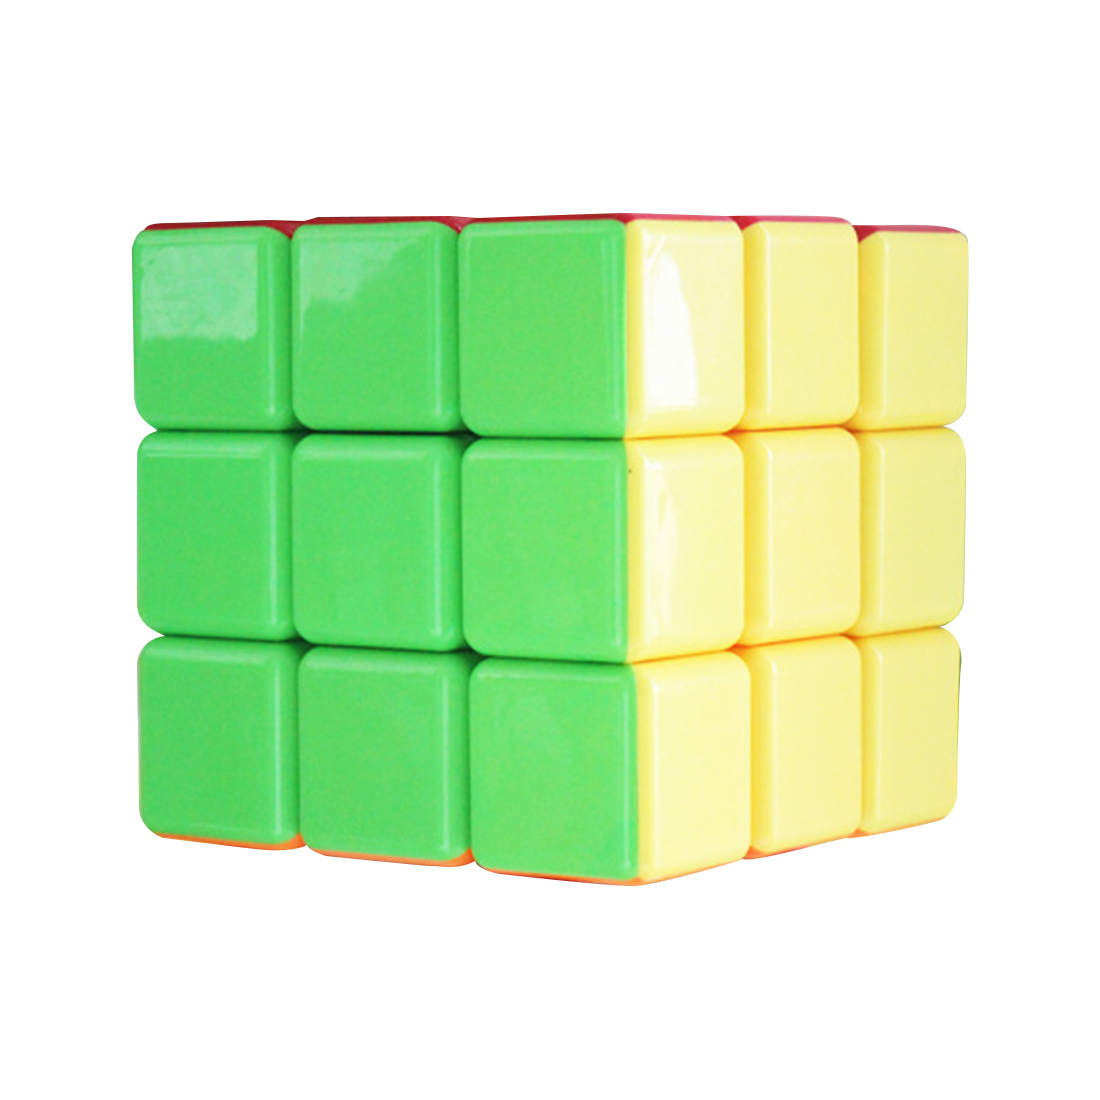 HeShu 18cm Super Big 3x3 Magic Cube (Stickerless)